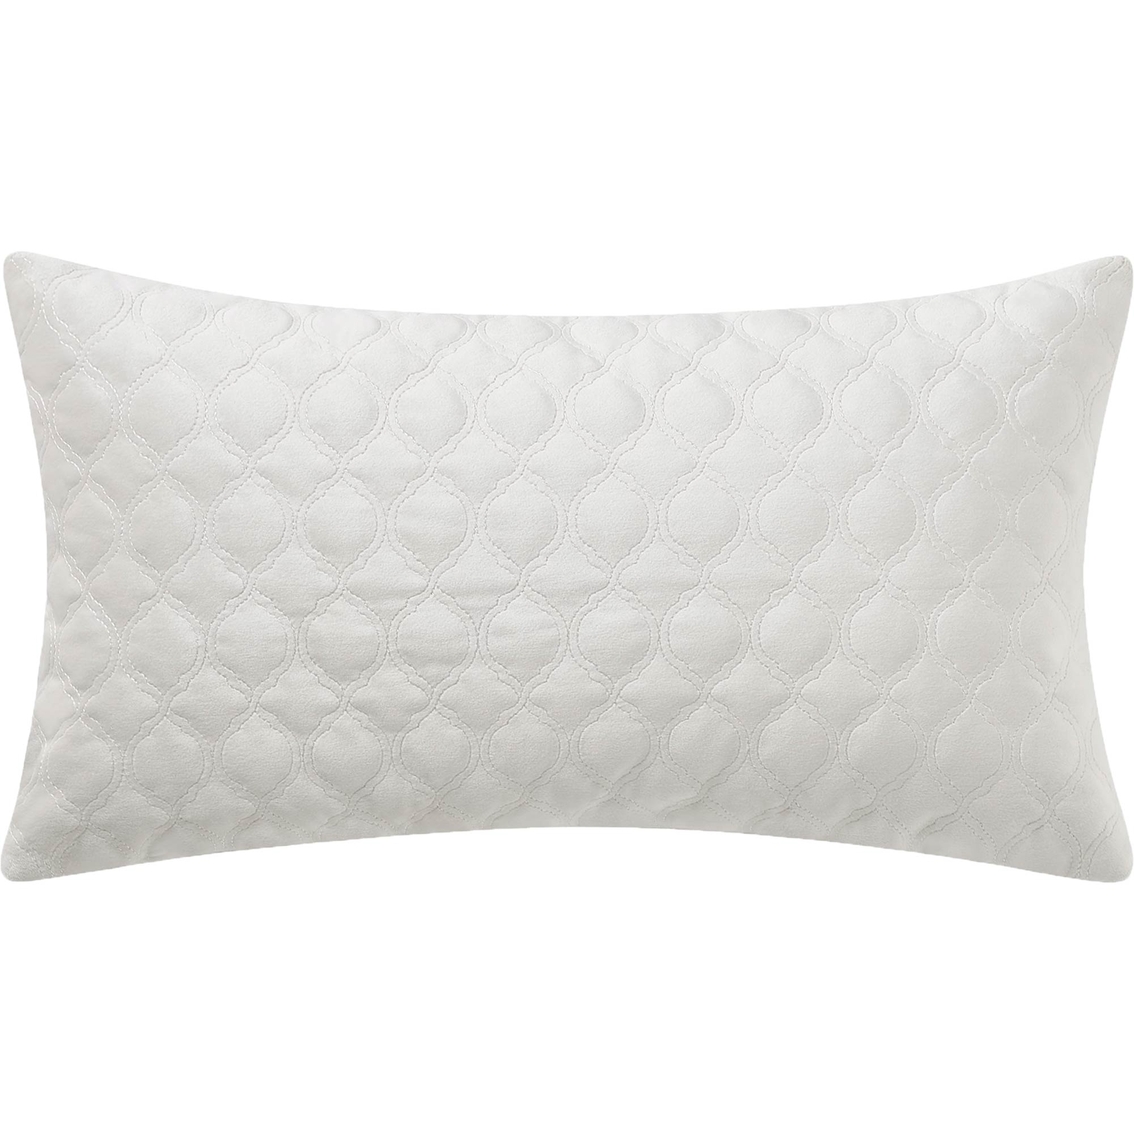 Waterford Maritana Decorative Pillows 3 pc. Set - Image 2 of 8